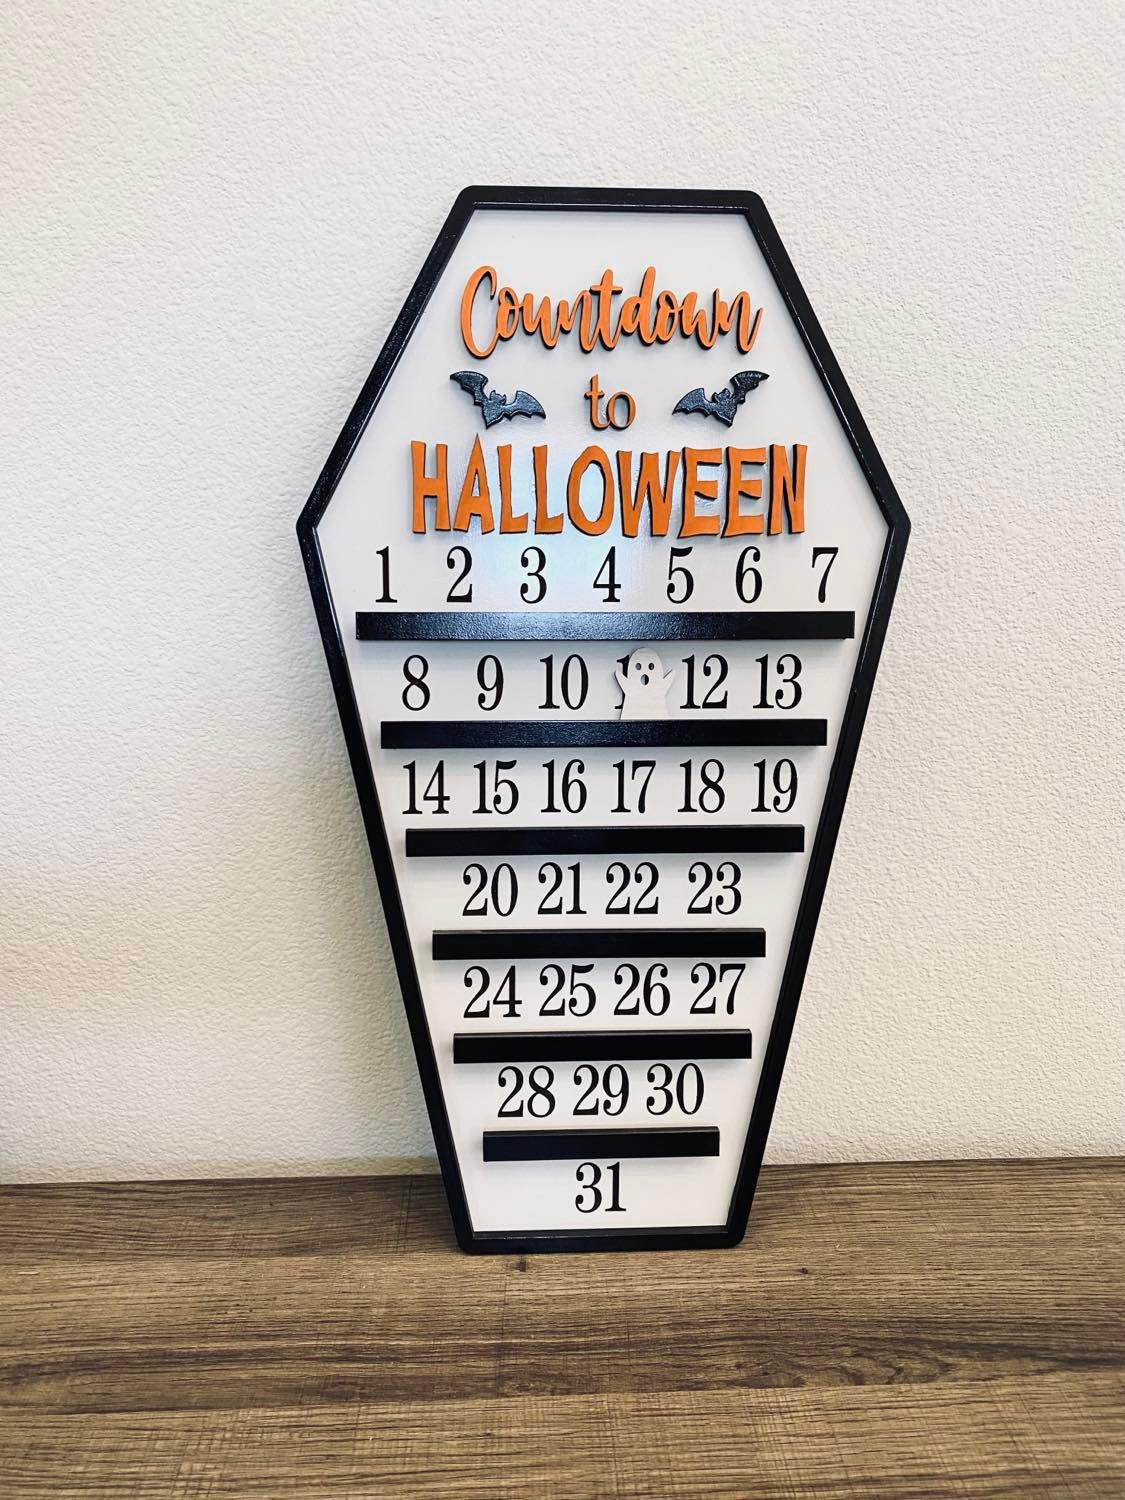 Countdown to Halloween Calendar Spooky Ghost